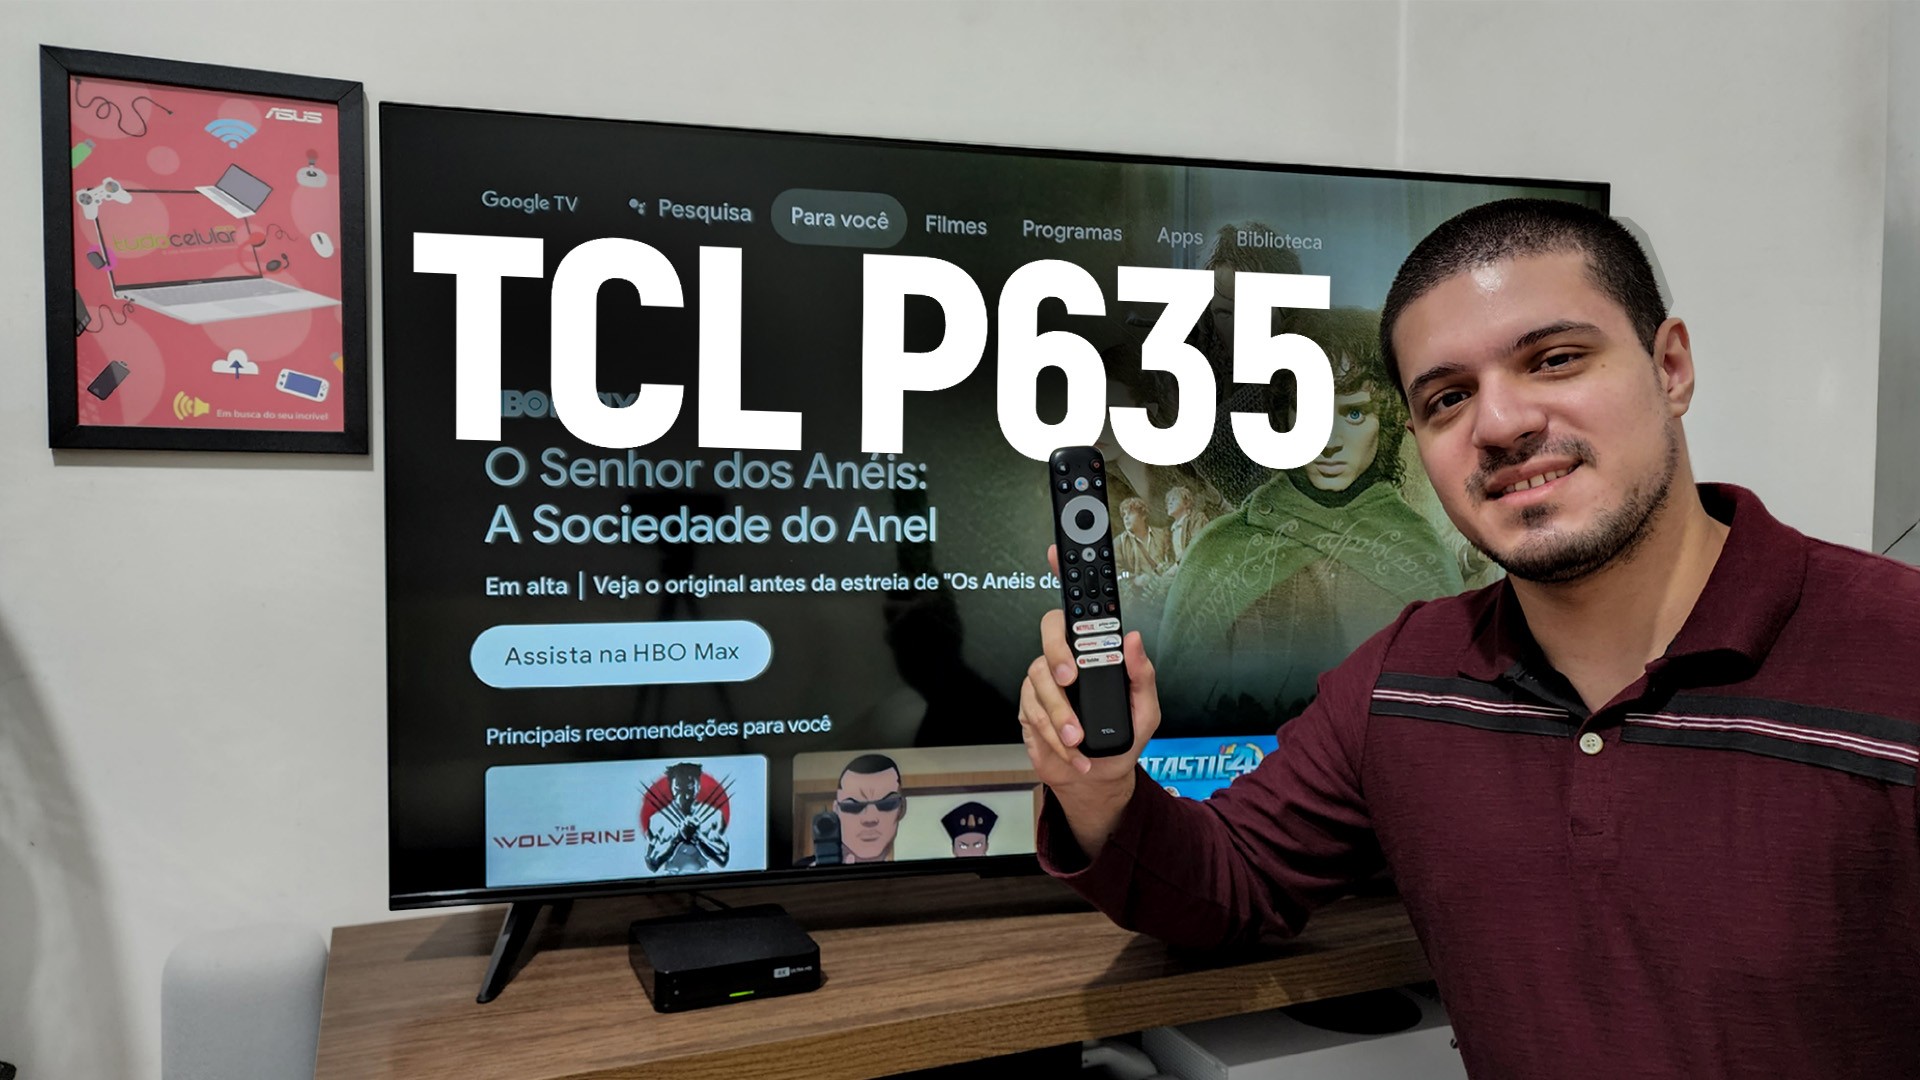 Smart TV LED 50 TCL P615 4K UHD HDR com Wifi e Bluetooth, 3 HDMI